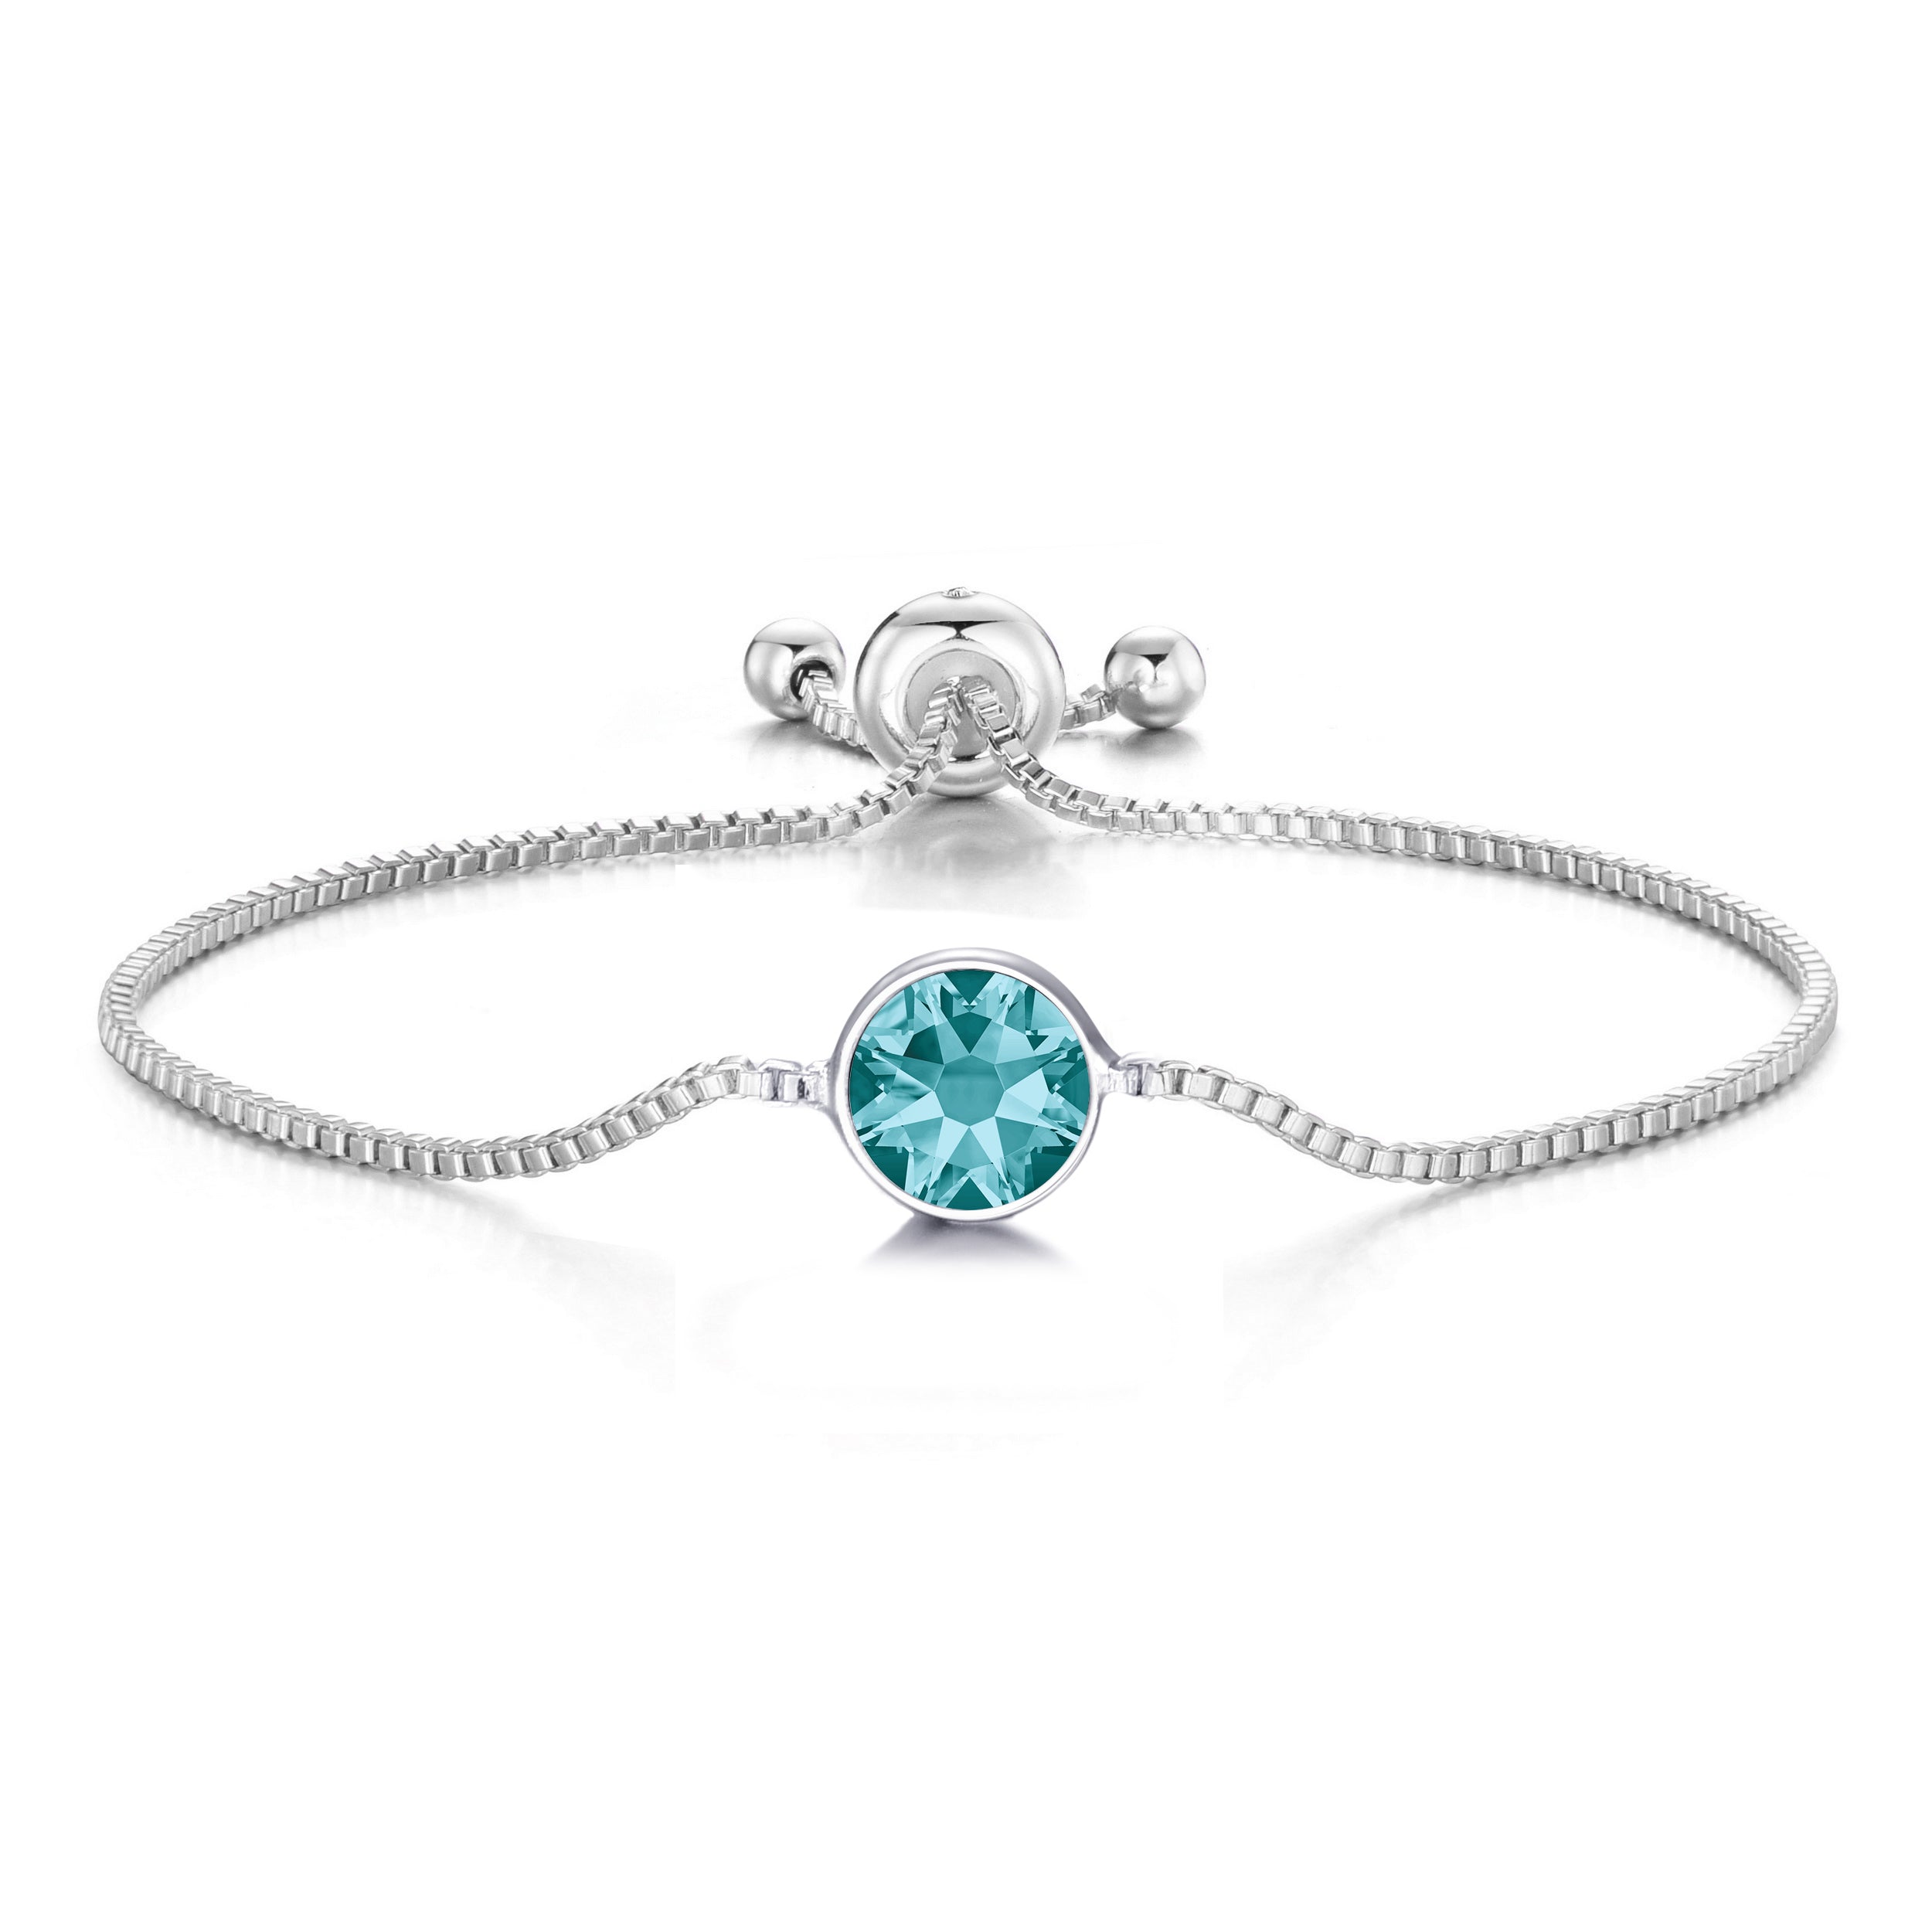 Blue Crystal Bracelet Created with Zircondia® Crystals by Philip Jones Jewellery